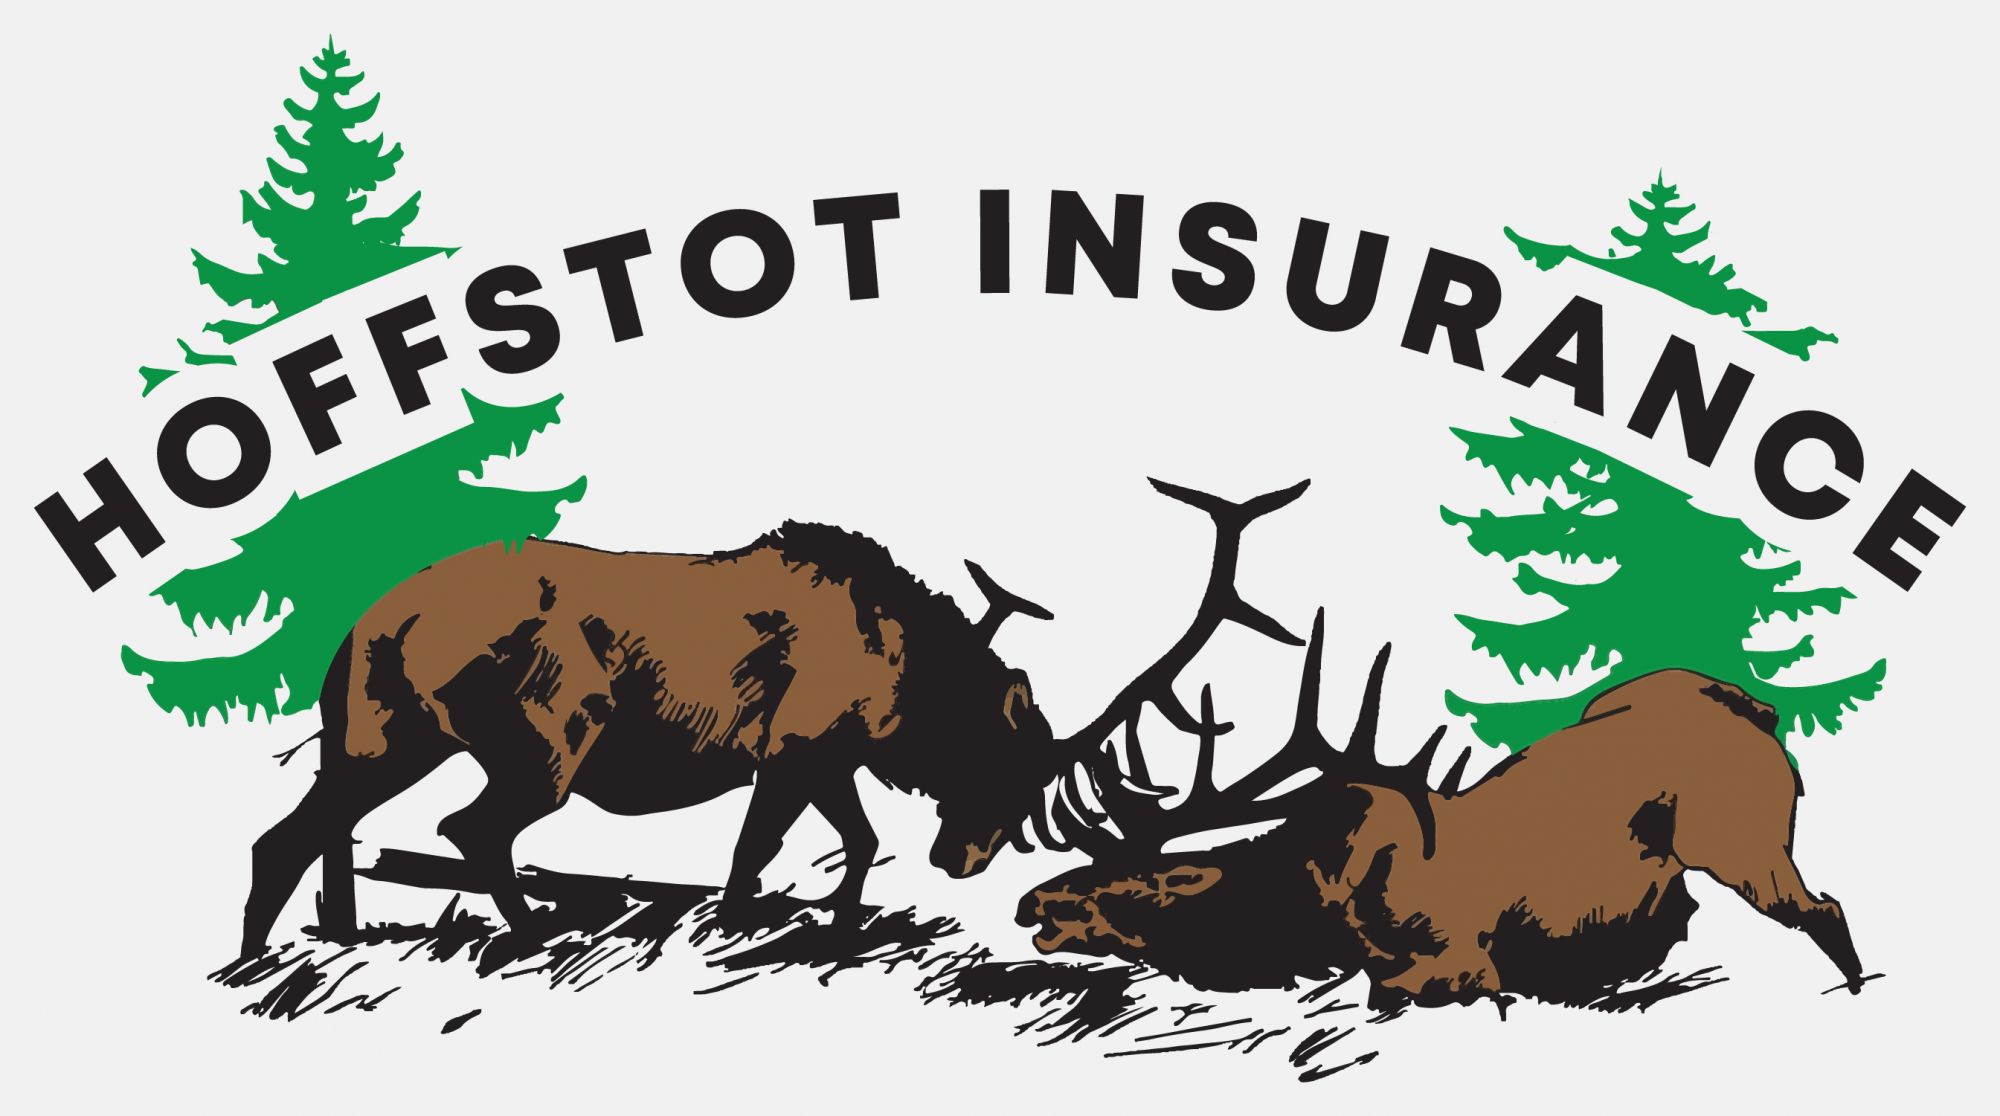 Ryan Hoffstot Insurance Agency Inc. - About Us